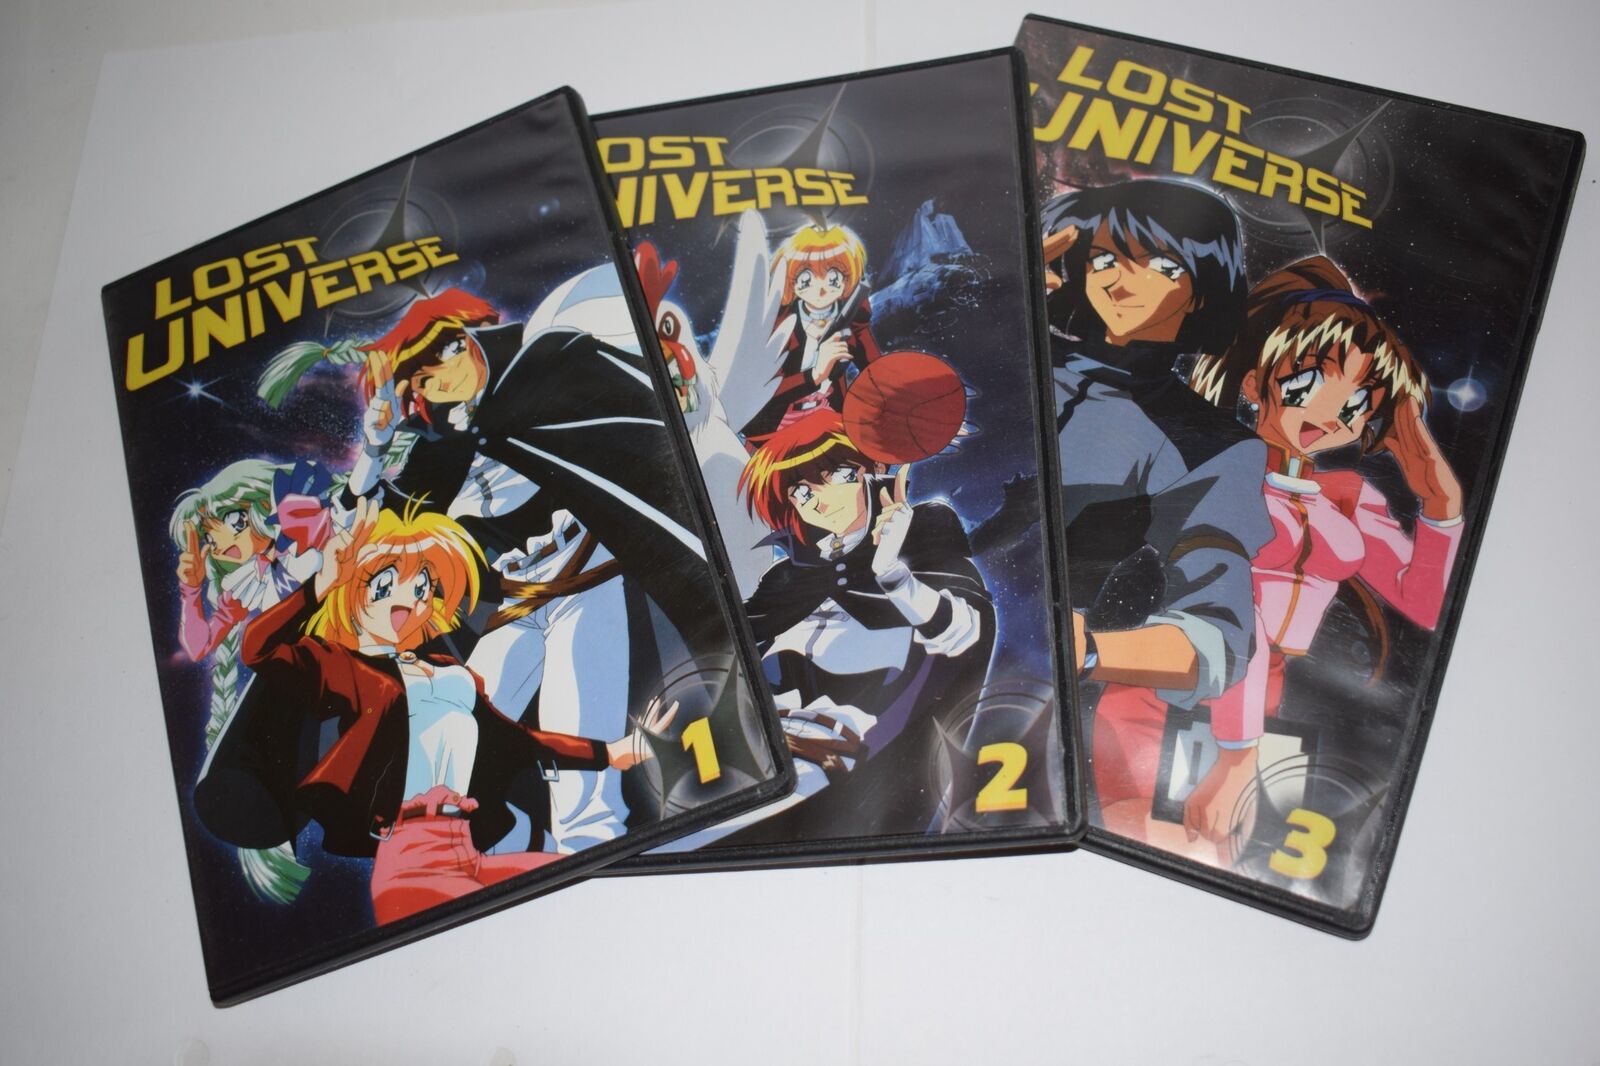 Lost Universe Vol 1-3 16 episodes 3-disc dvd lot nozomi anime(CHI16)